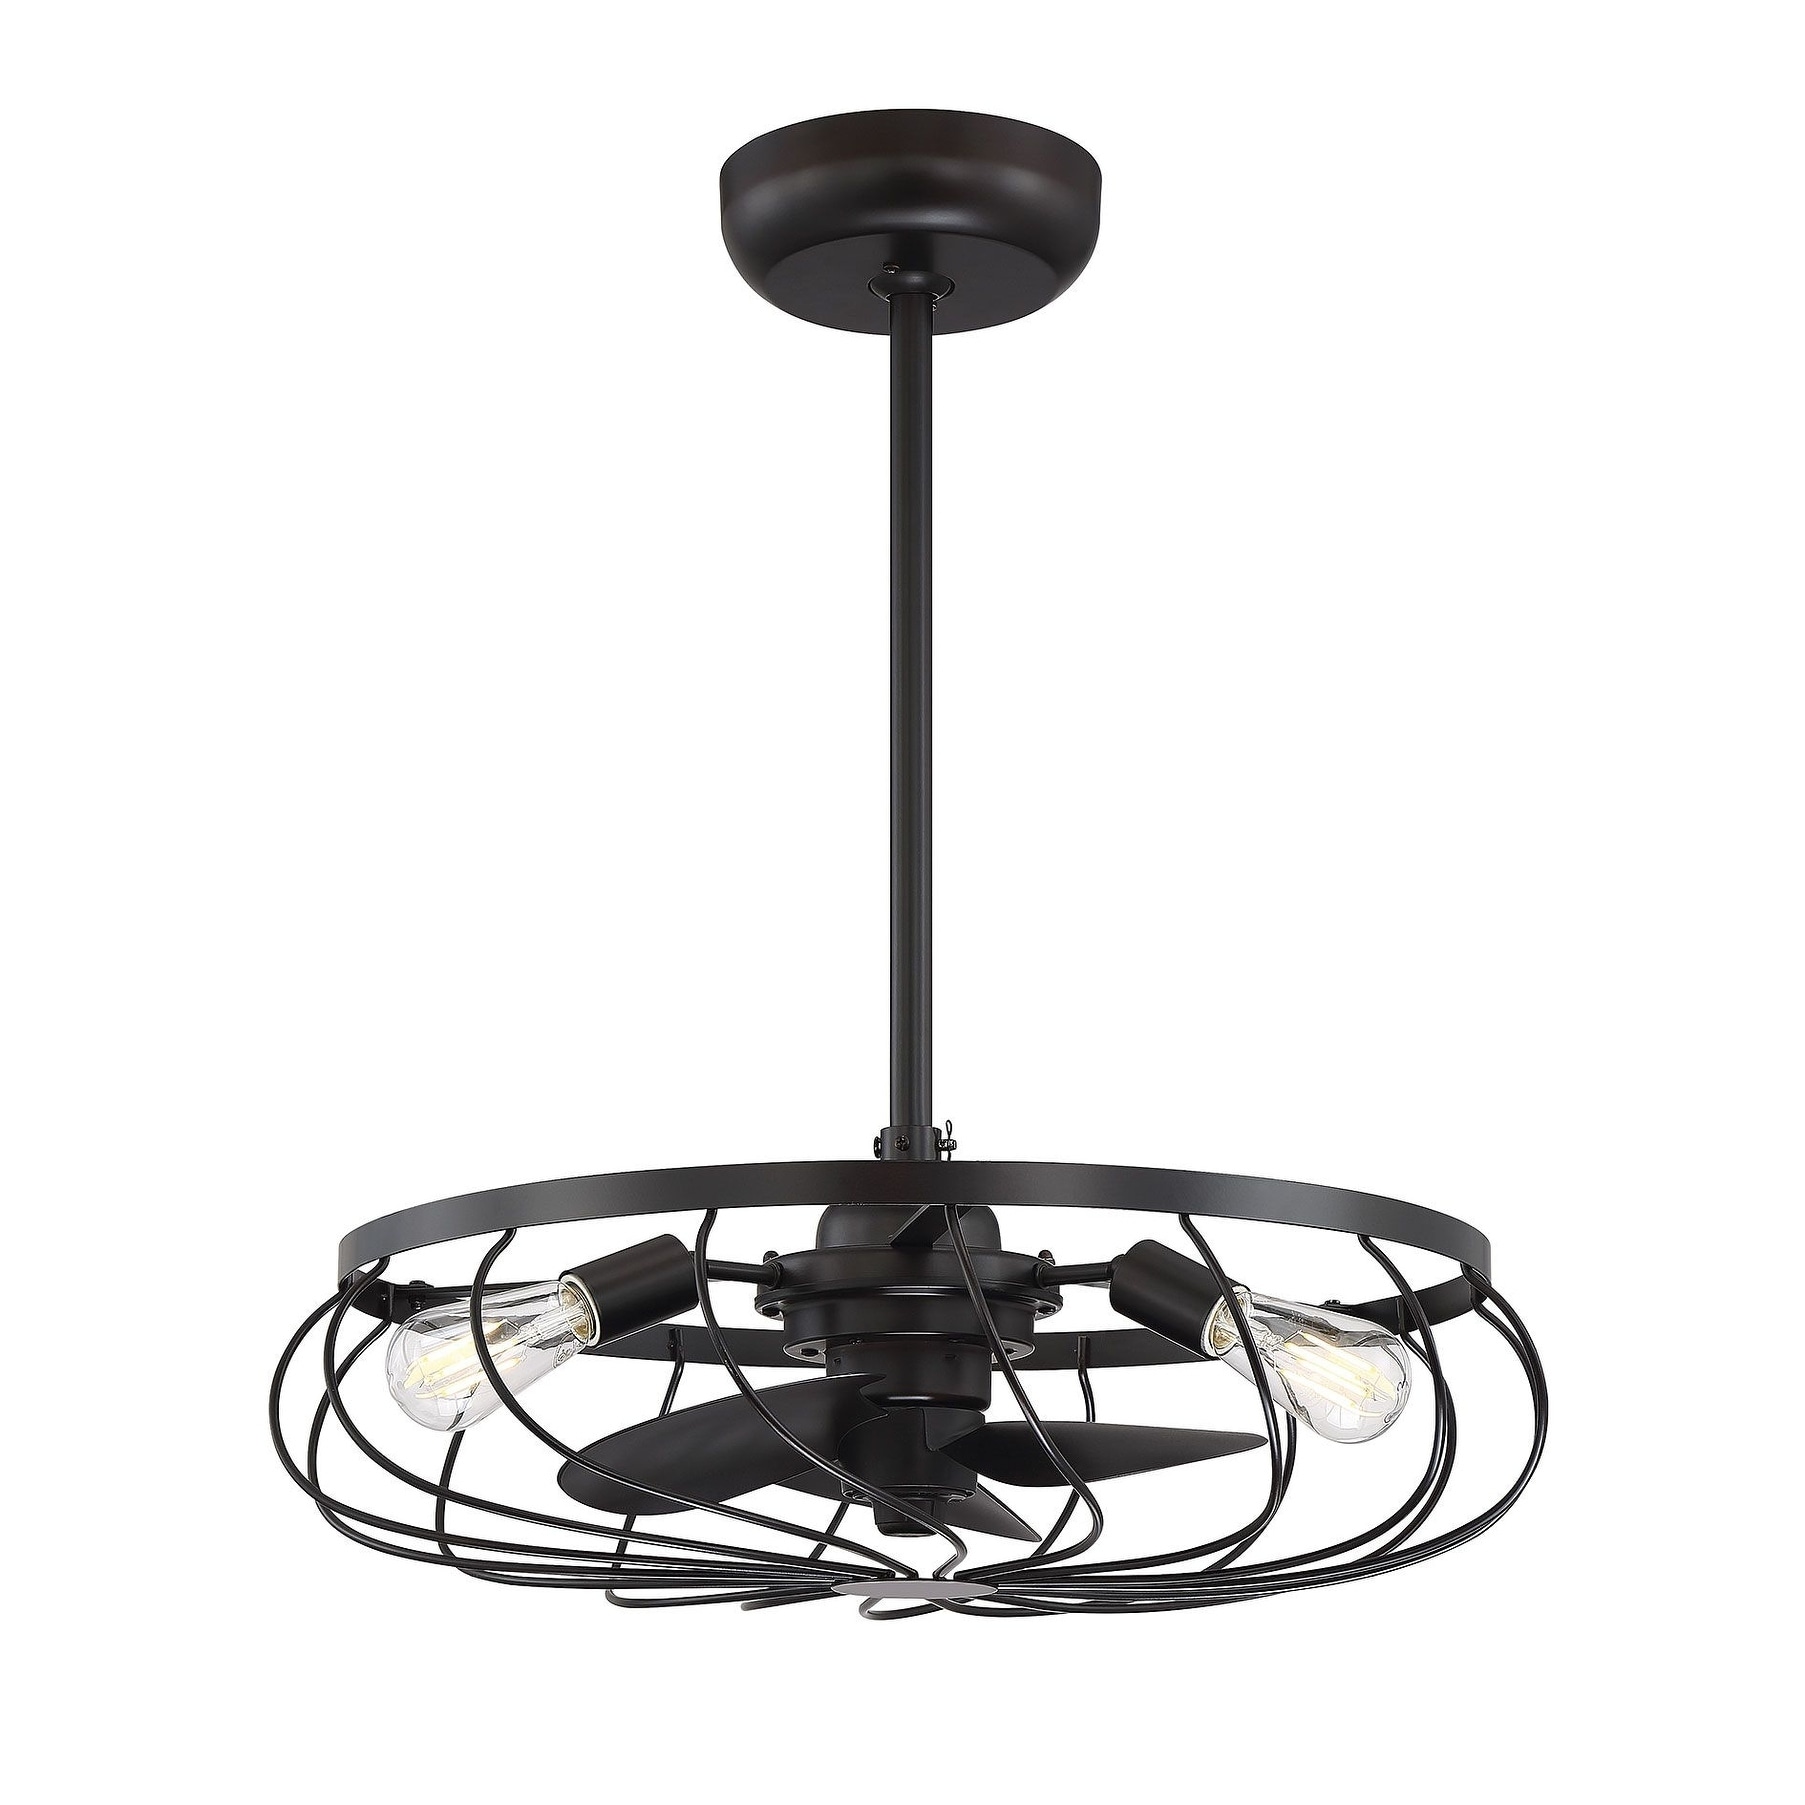 24 In Indoor Oil Rubbed Bronze Ceiling Fan With Light Overstock 27298813